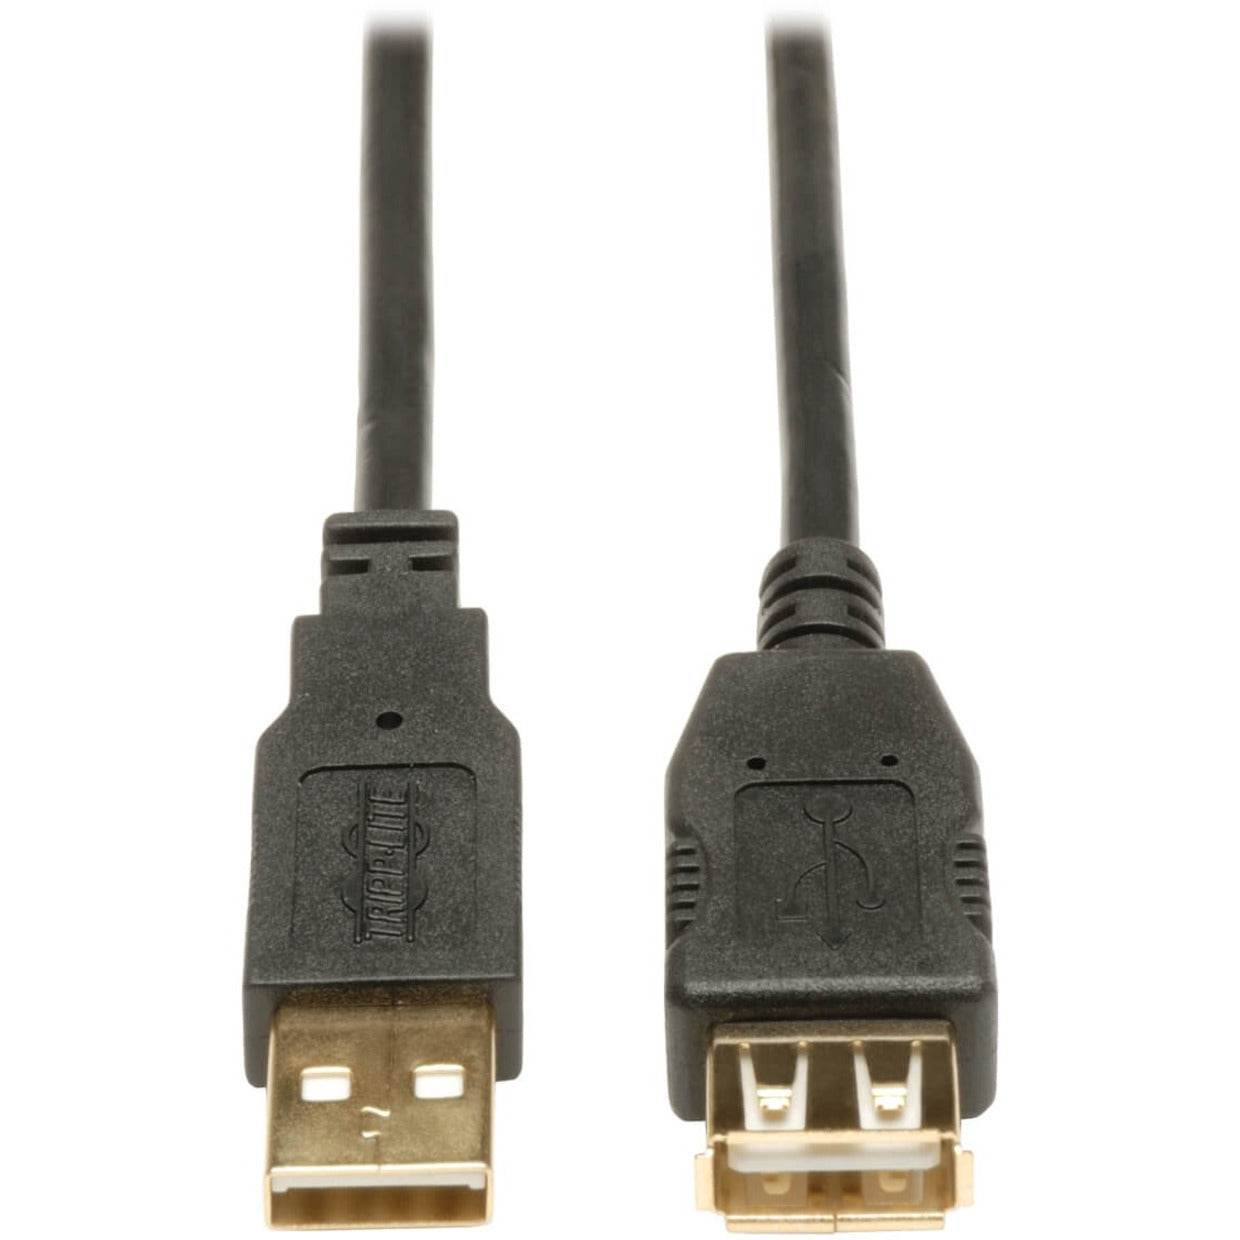 Tripp Lite U024-010 USB 2.0 高速 延长线 10 英尺 黑色 Tripp Lite 转换名称为楚曦.